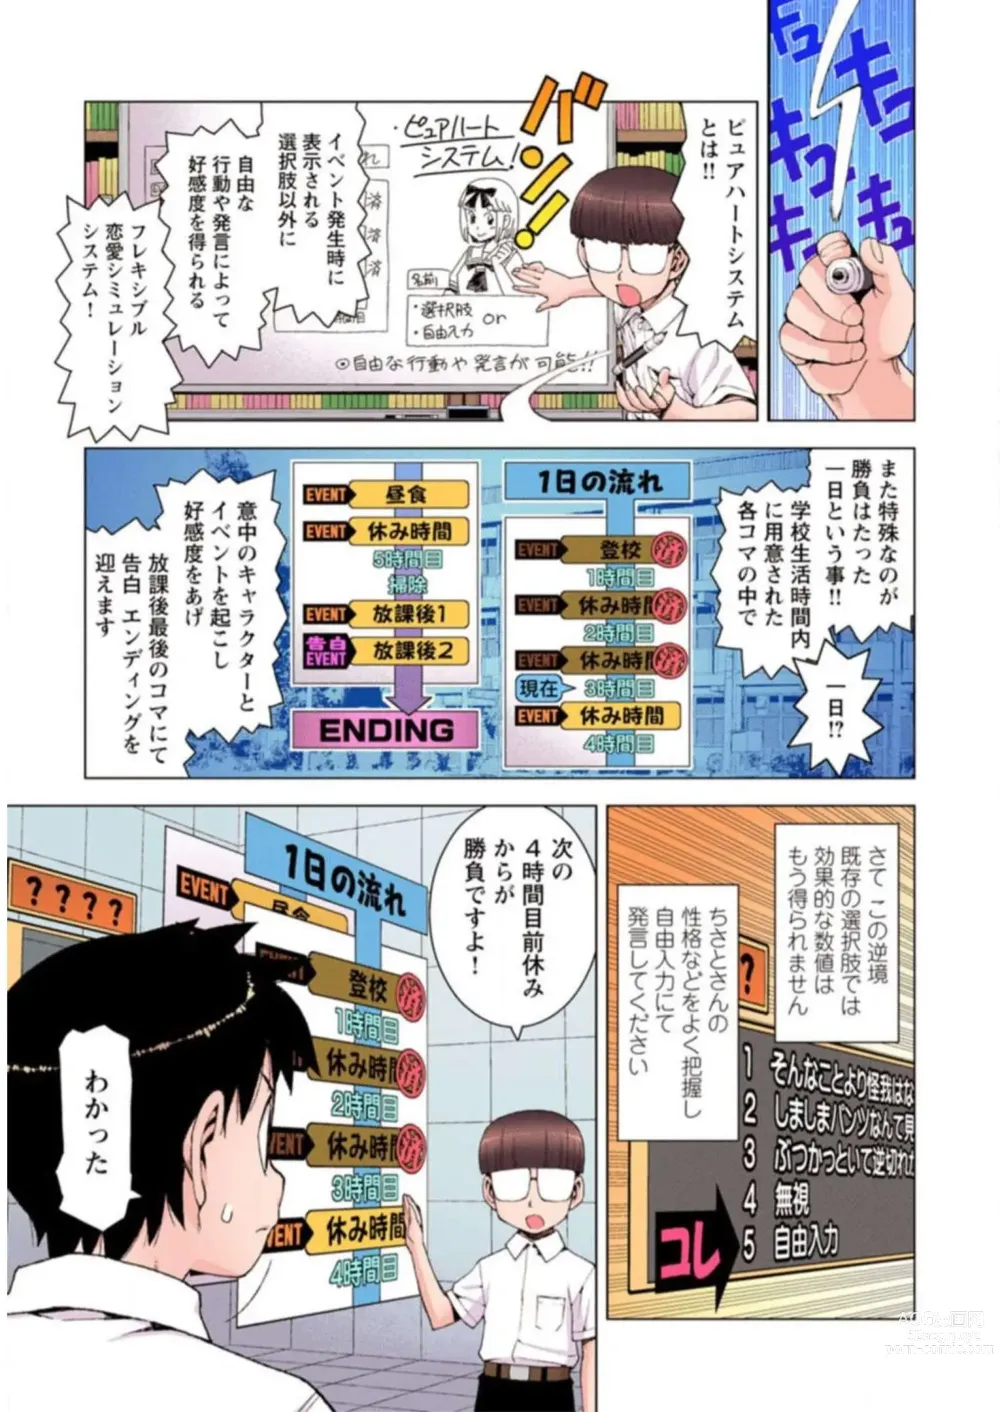 Page 21 of manga Tsugumomo Digital Colored Comics V3